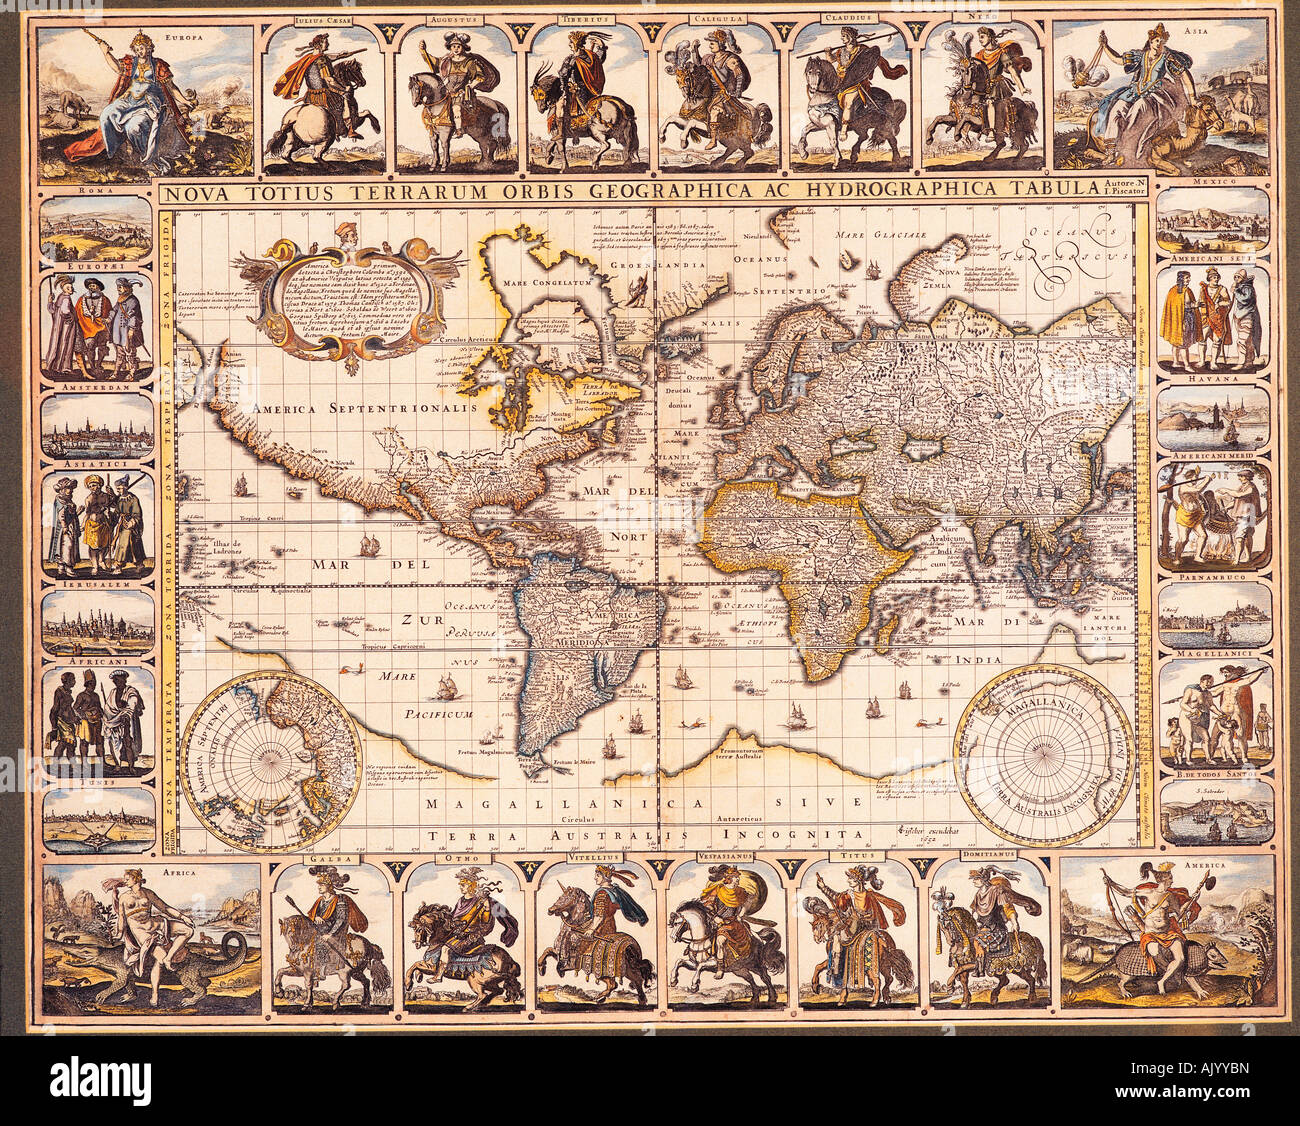 Historische Karte der Welt. Nova totius Terrarum Orbis geographica ac hydrographica Tabula von Hendrik Hondius, 1630. Stockfoto